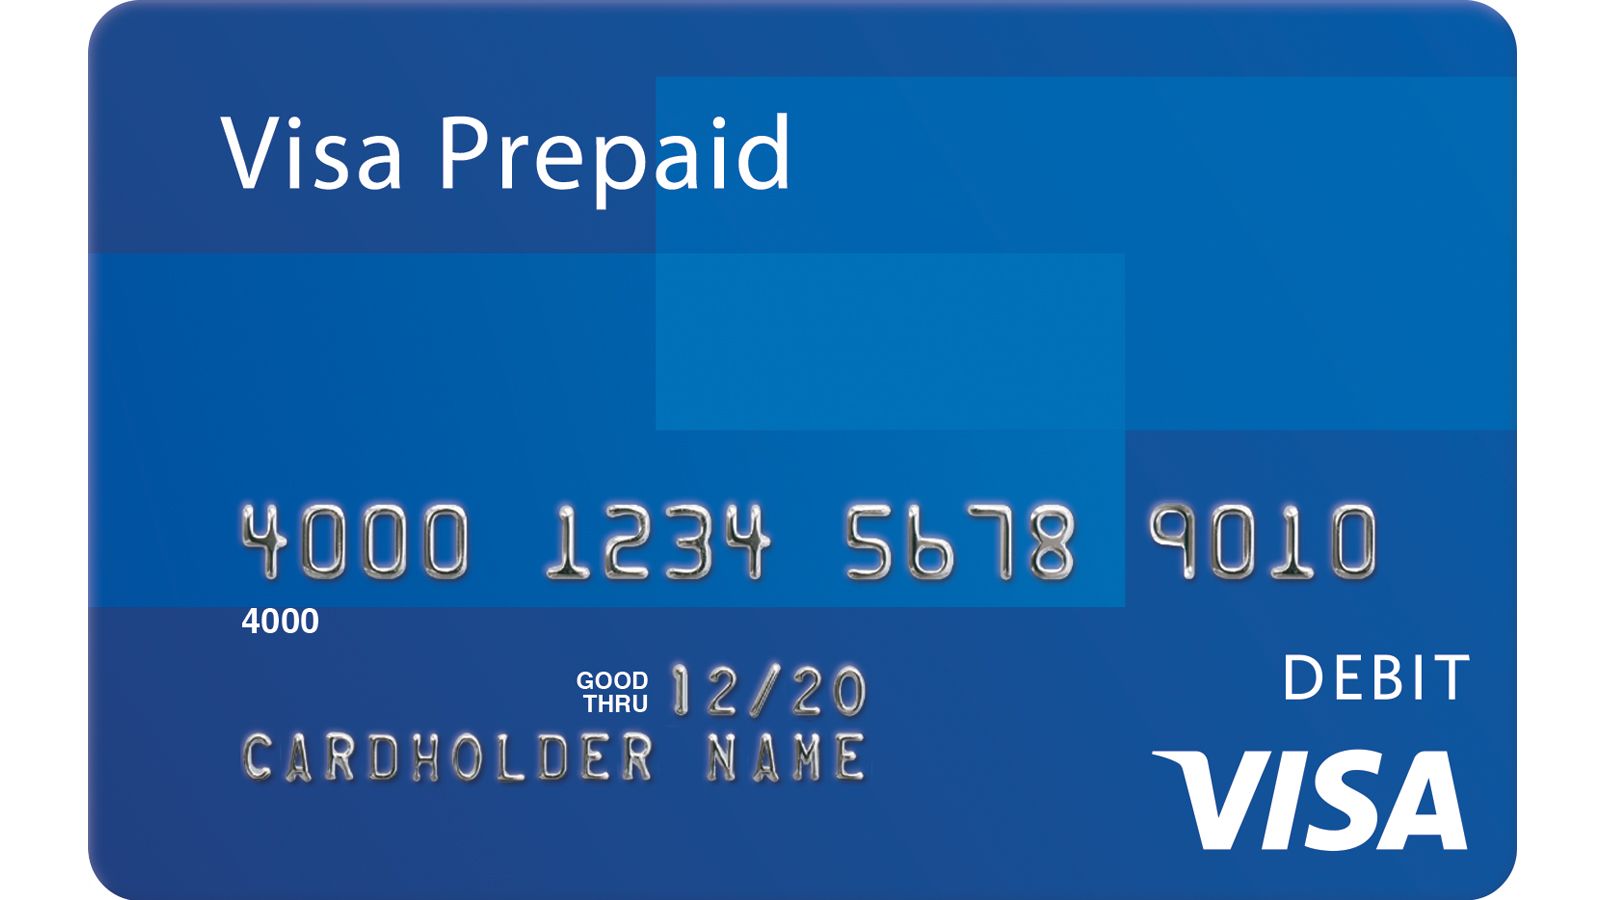 T me ccn visa. Visa prepaid Card. Карточка виза. Предоплаченные карты. Предоплаченные банковские карты.